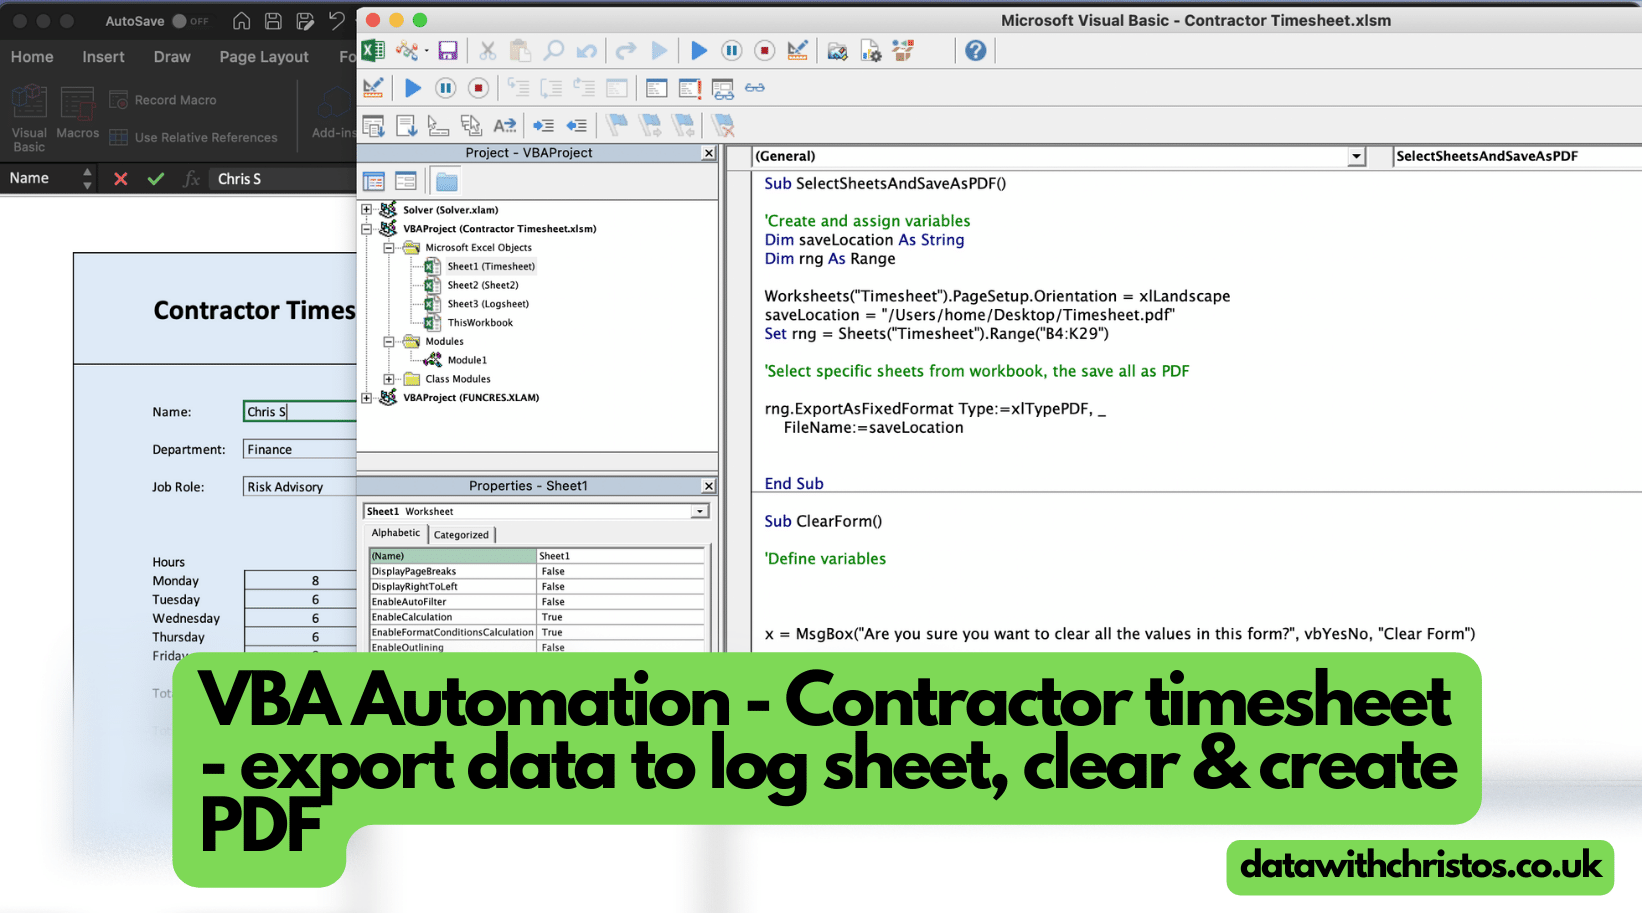 [VBA] Export Data to log sheet, clear & create PDF